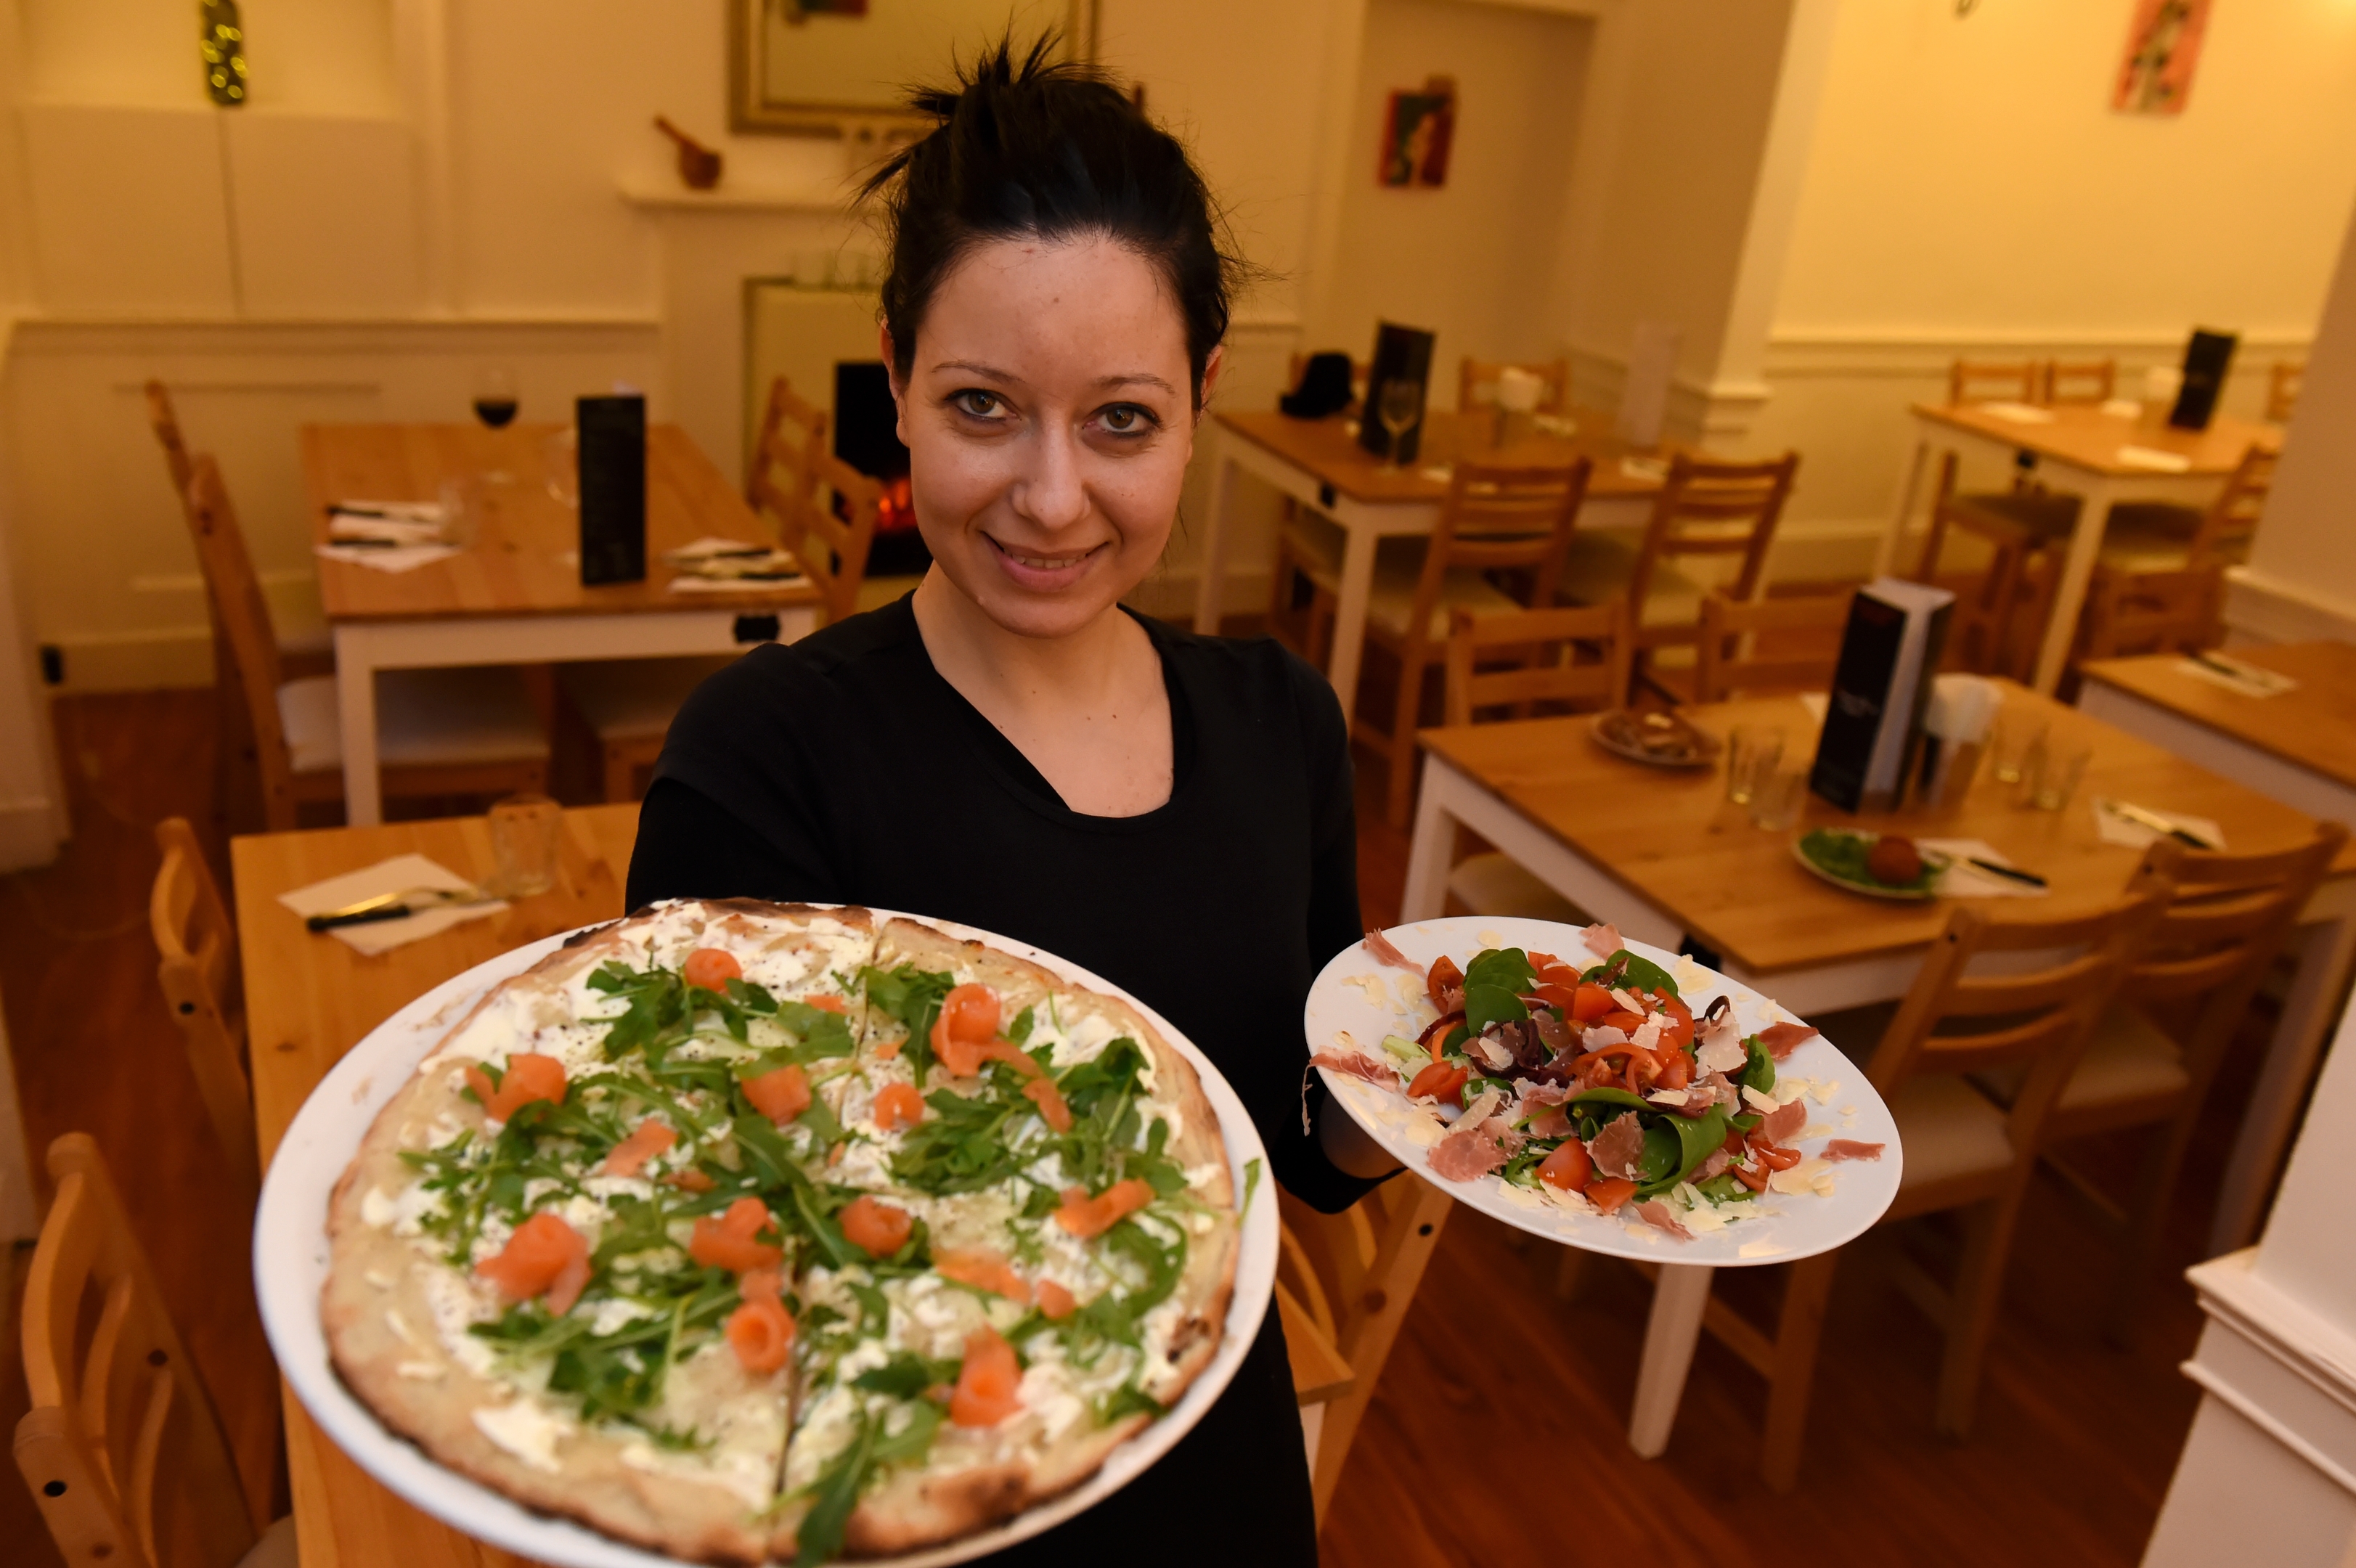 Alessandra Di Carlo holding a pizza and salad. 